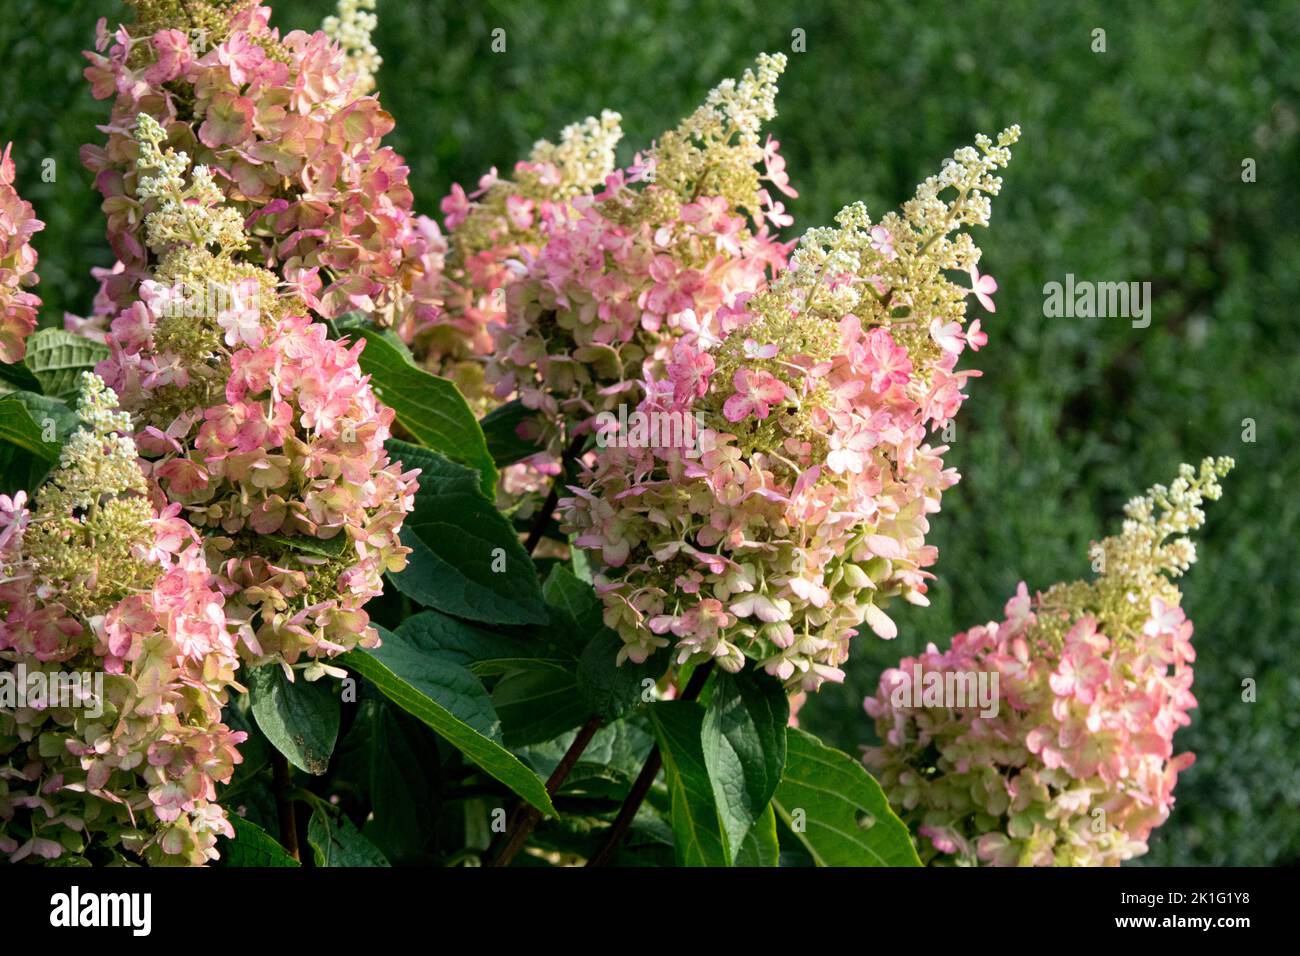 Hydrangea 'Pinky Winky', Hydrangea, Flowers, Hydrangea paniculata, Panicle Hydrangea Pink, Blooms, Garden, Hydrangea paniculata 'Pinky Winky' Stock Photo